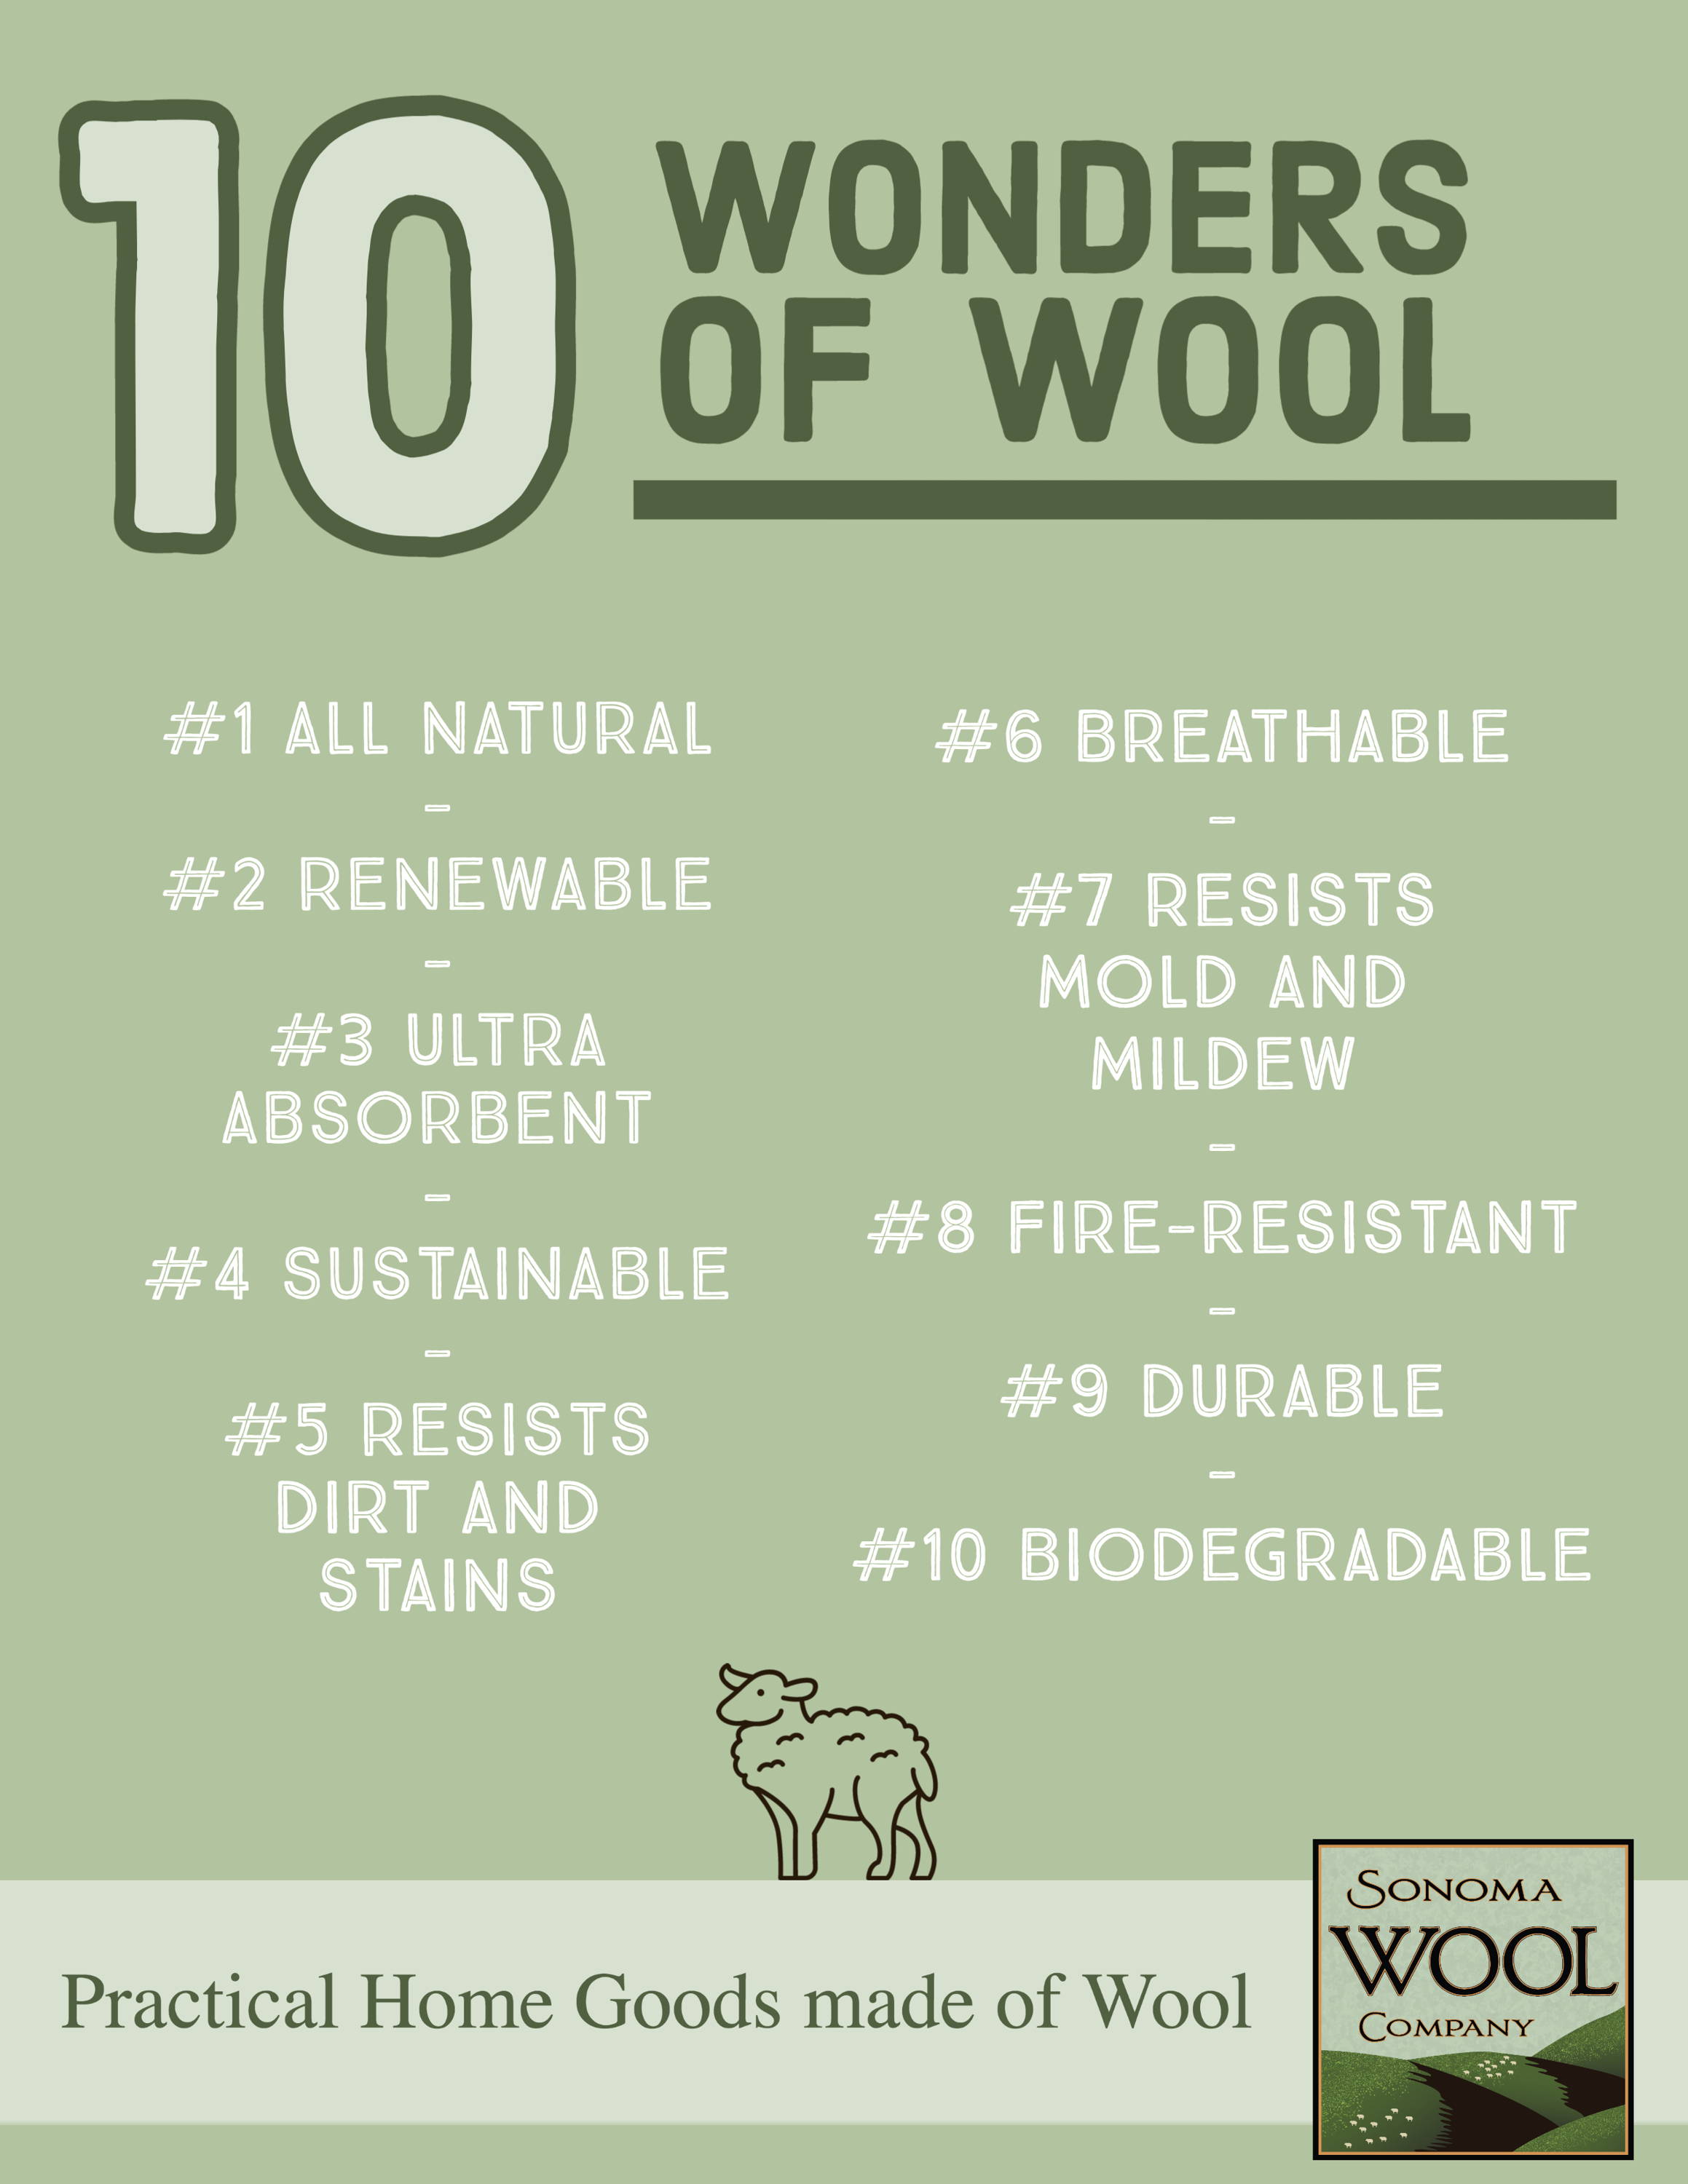 Ten Wonders of Wool by Sonoma Wool Company